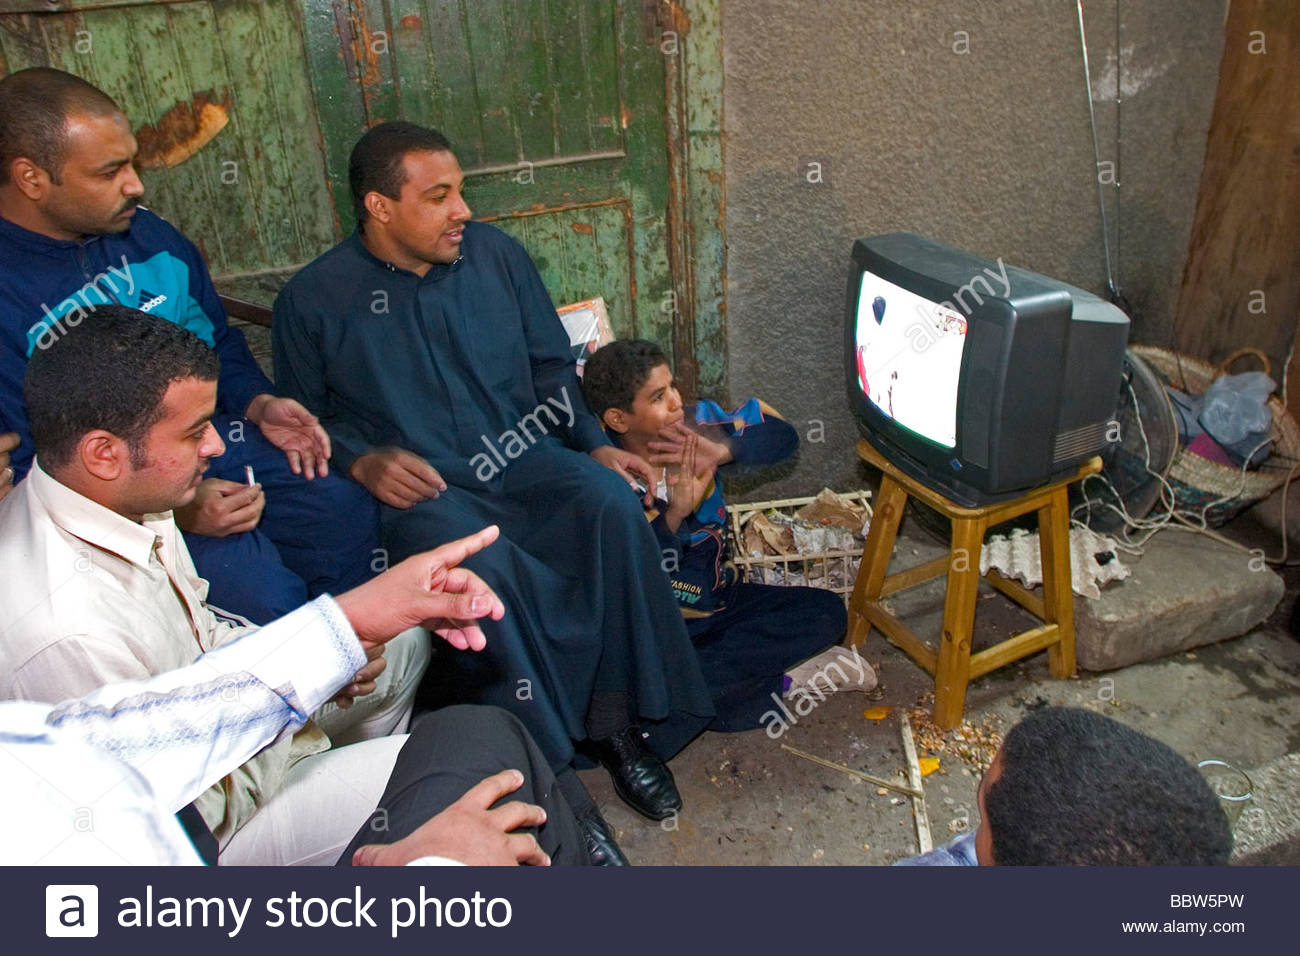 africa-egypt-luxor-the-market-people-watching-a-football-match-BBW5PW.jpg